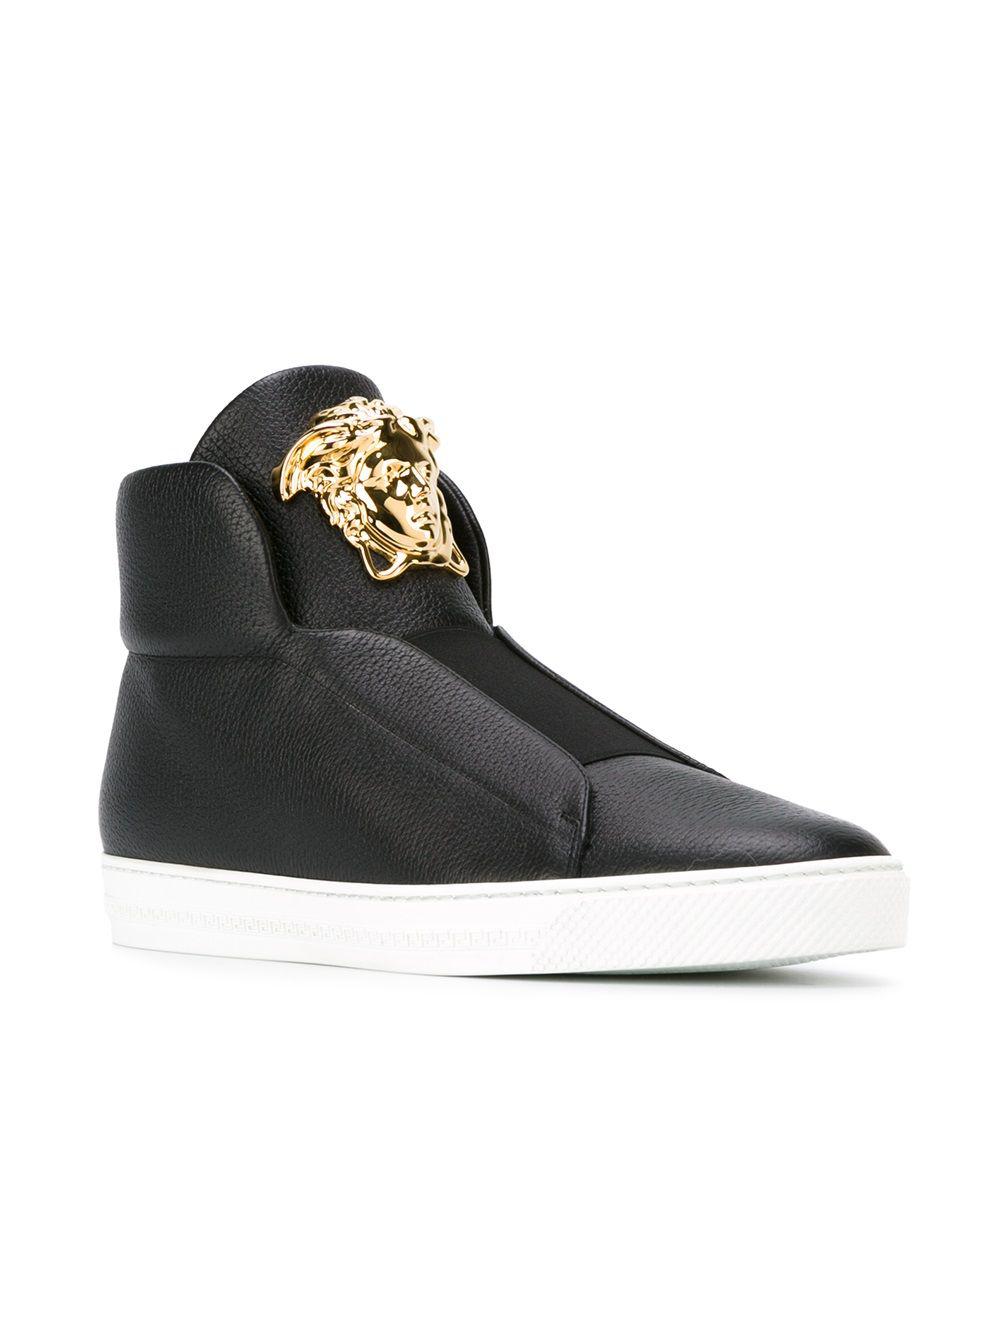 Versace Leather Medusa Hi-top Sneakers in Black for Men - Lyst